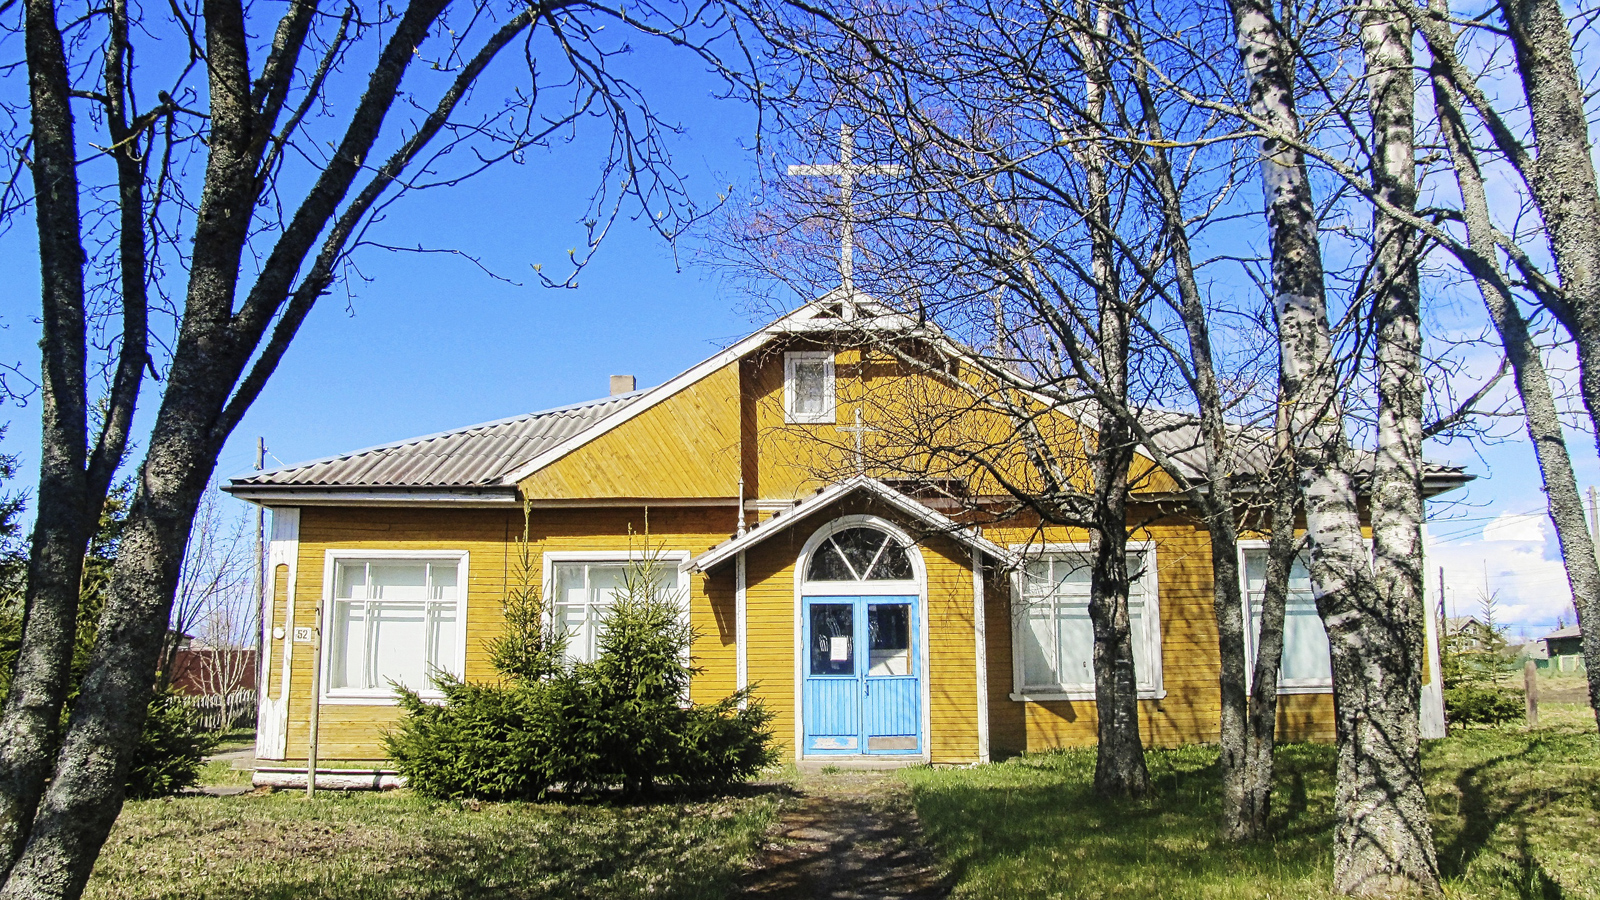 May 15, 2022. The Chapel church in Vidlitsa